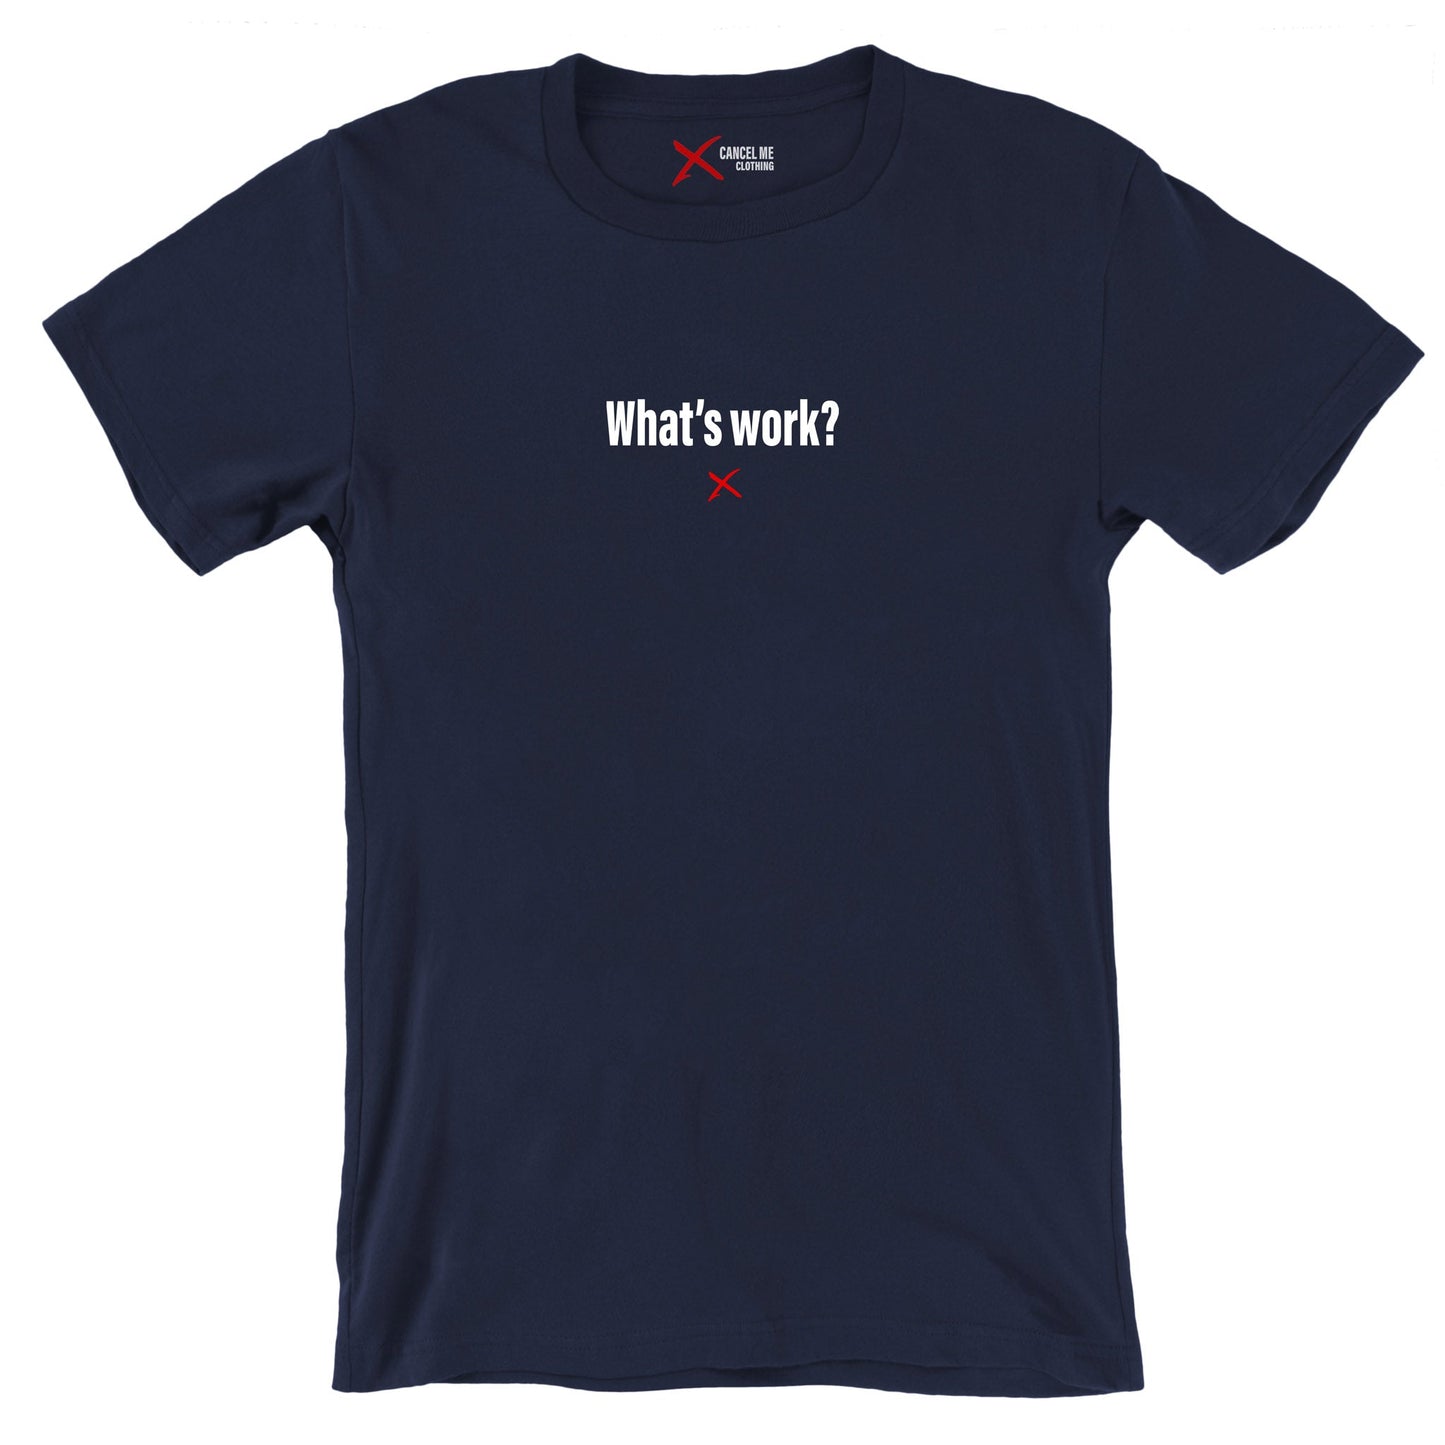 What's work? - Shirt